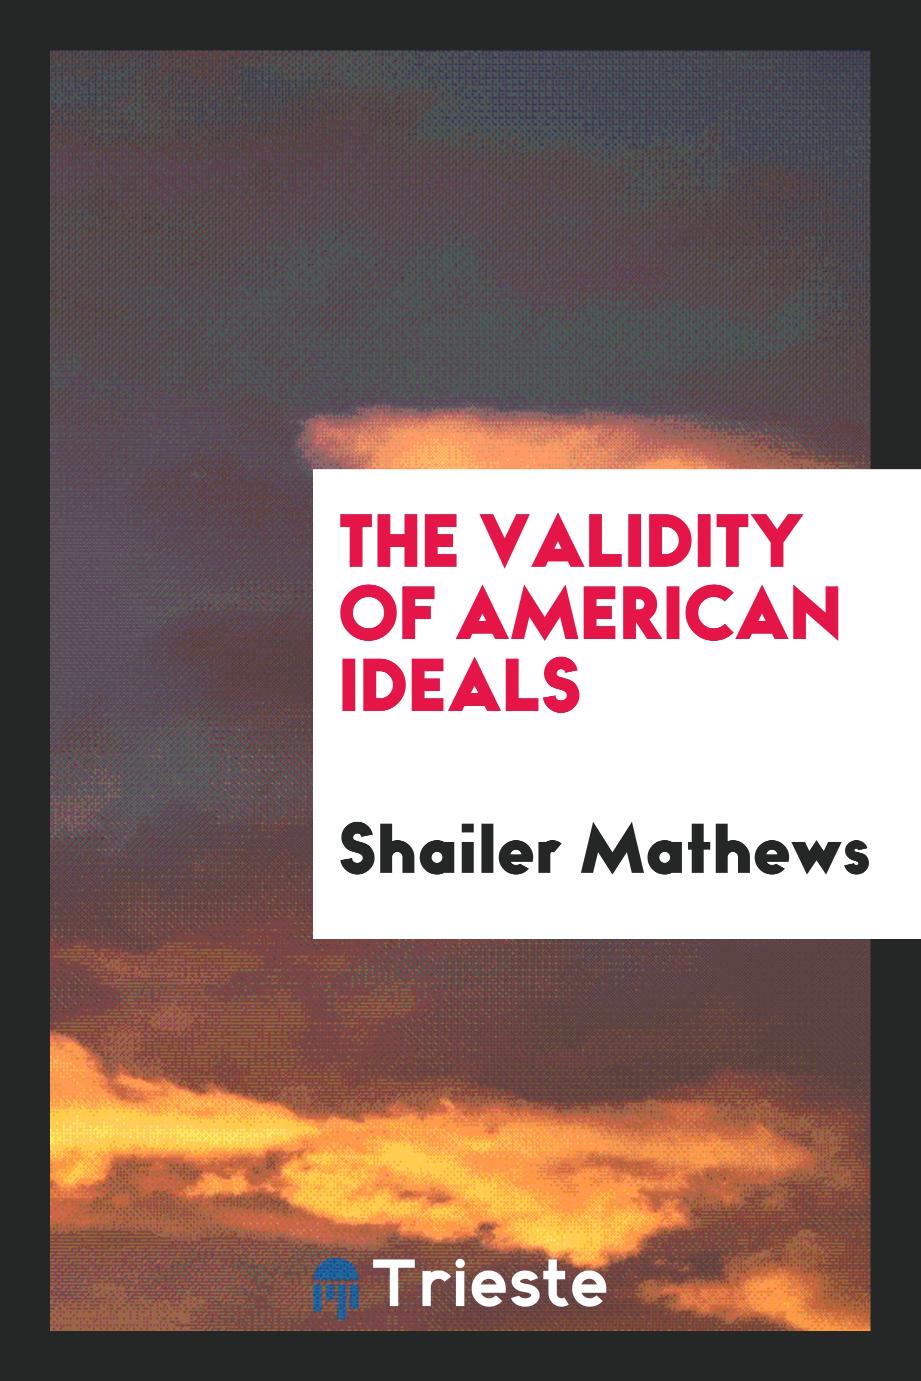 Shailer Mathews - The validity of American ideals